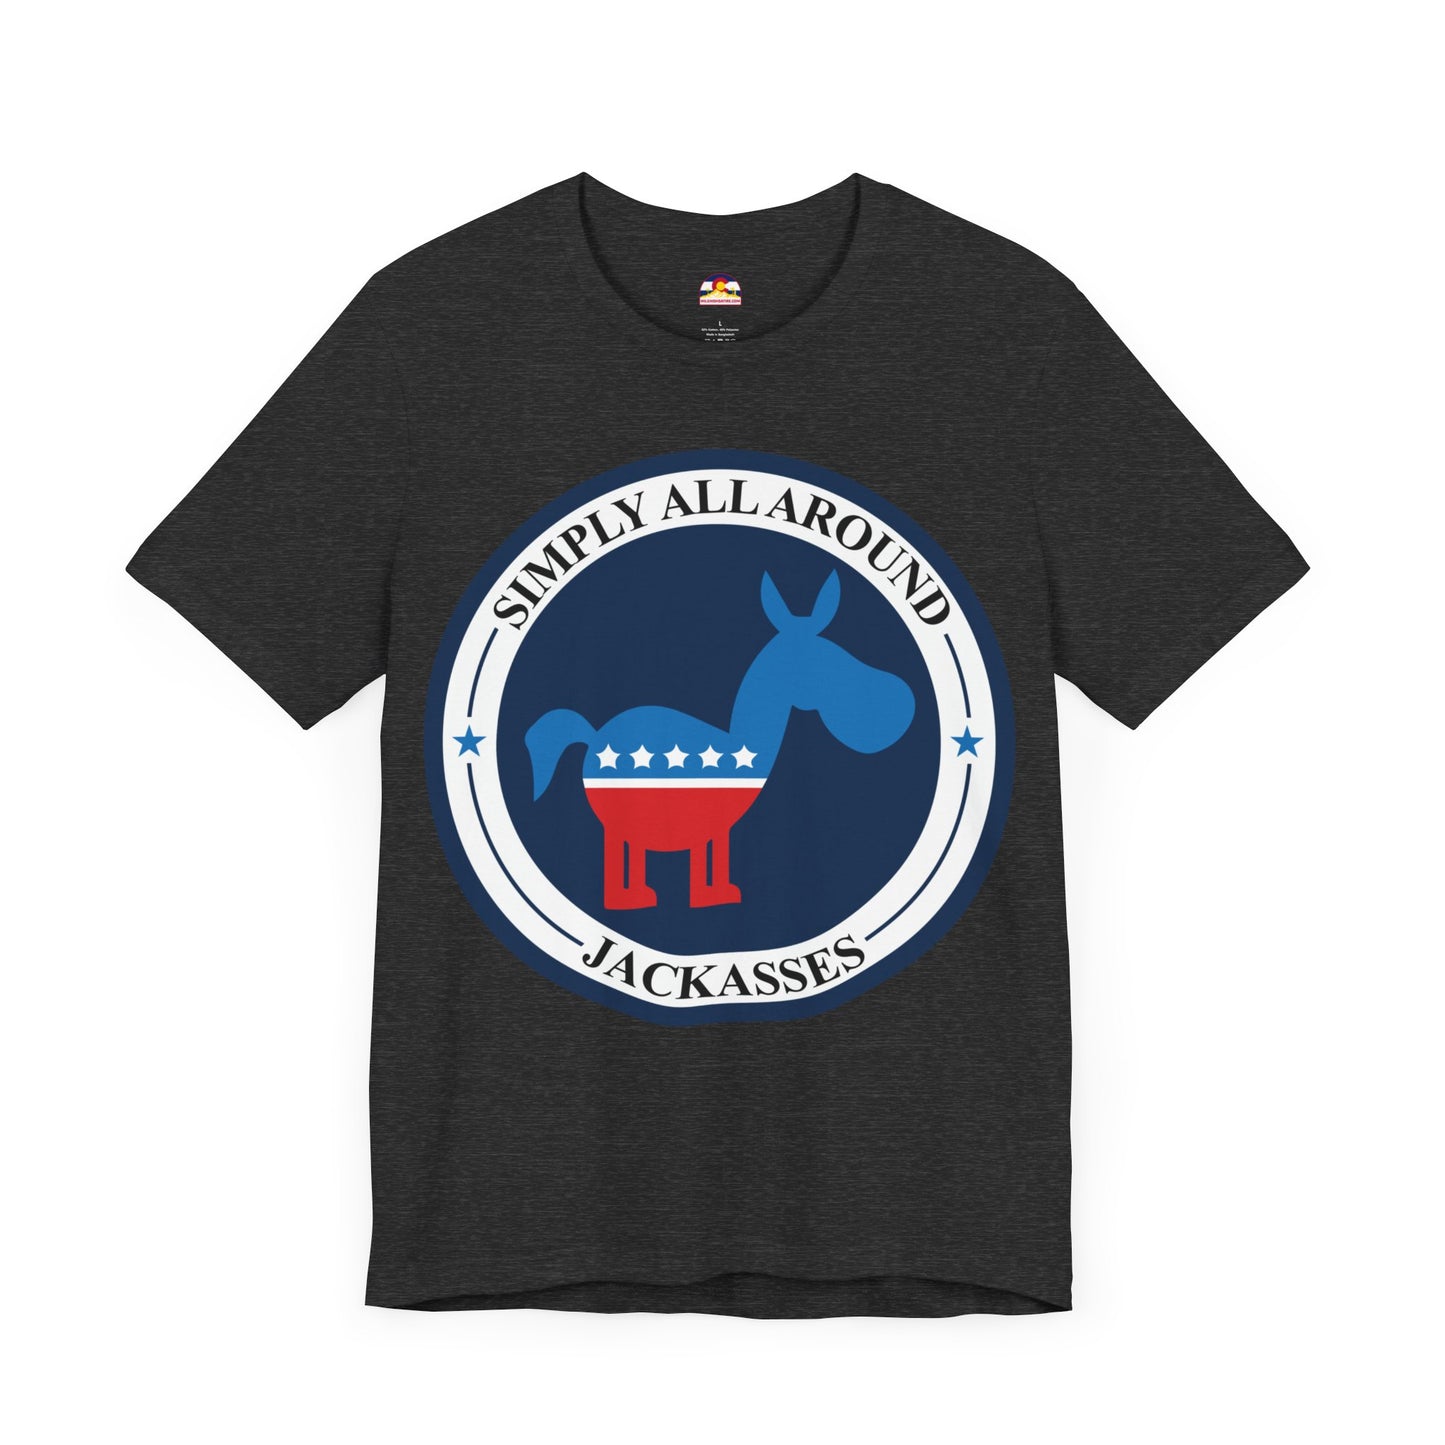 Democratic Donkey: Simply Jackasses T-Shirt